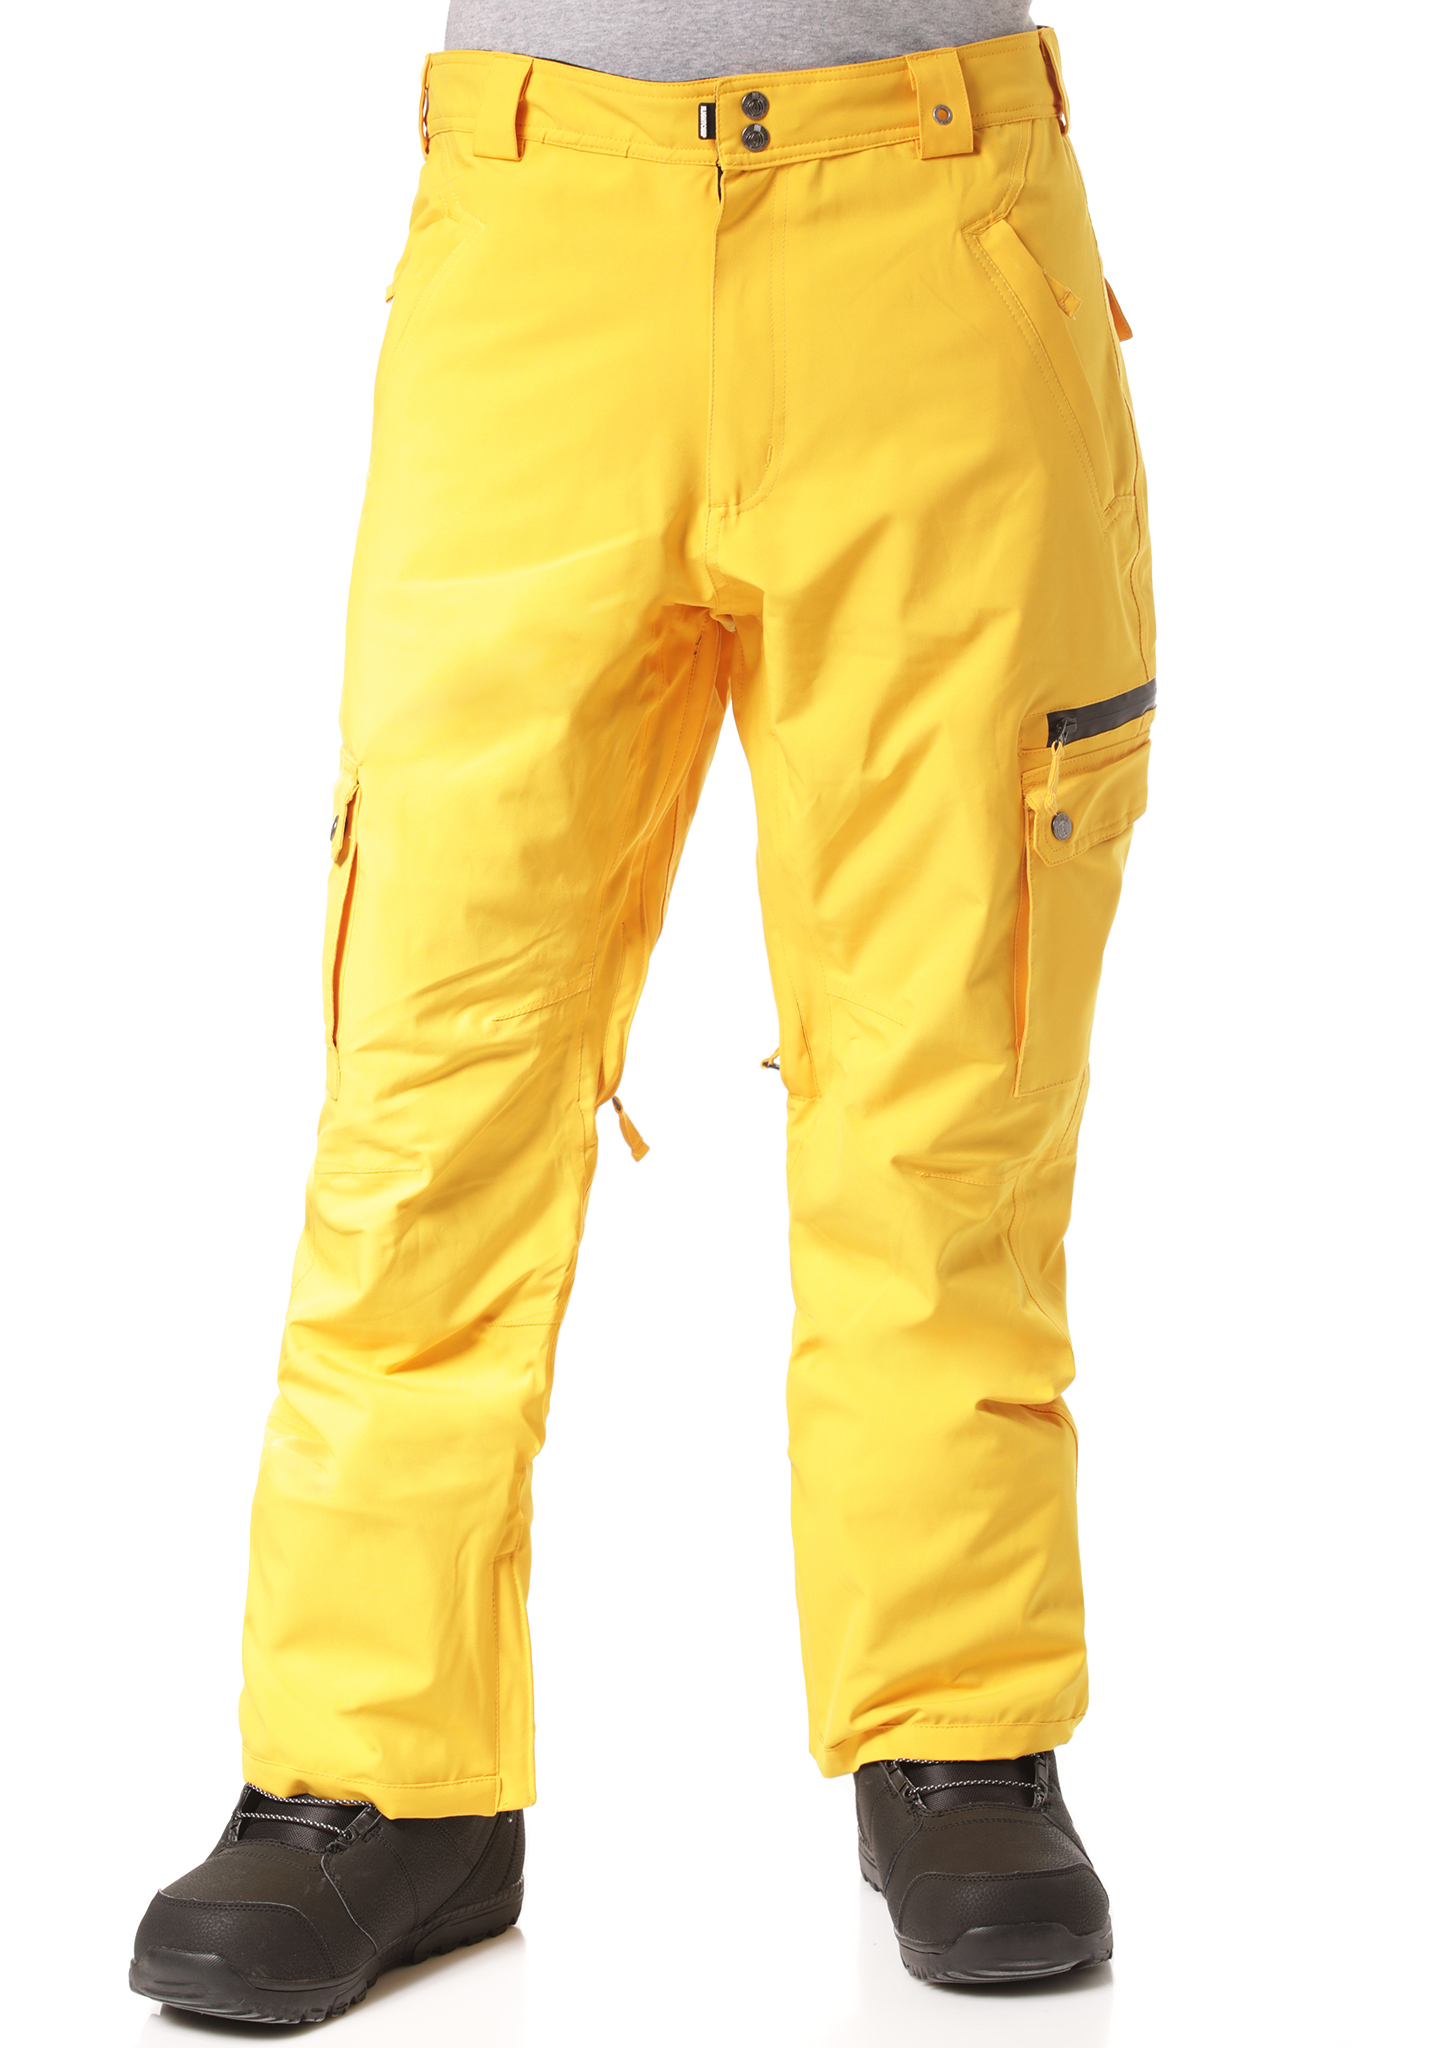 LIGHT Fuse Snowboardhosen yellow XL